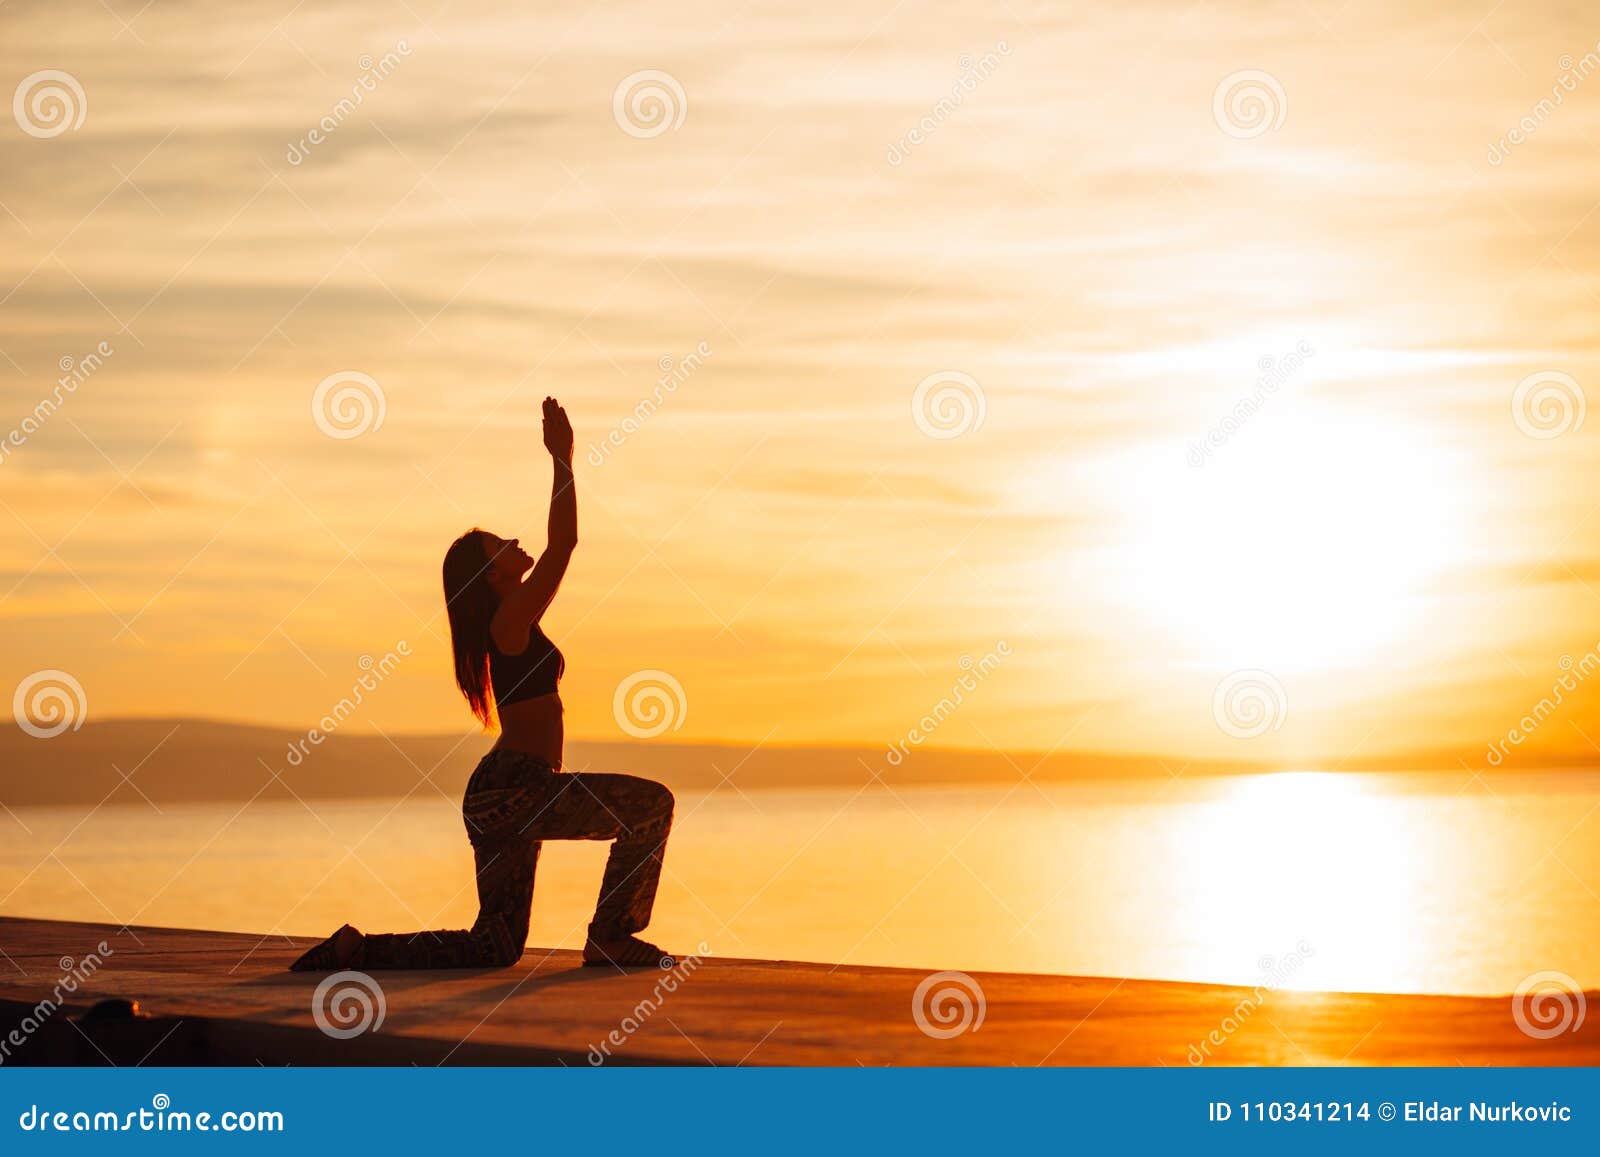 carefree woman meditating in nature.finding inner peace.yoga practice.spiritual healing lifestyle.enjoying peace,anti-stress